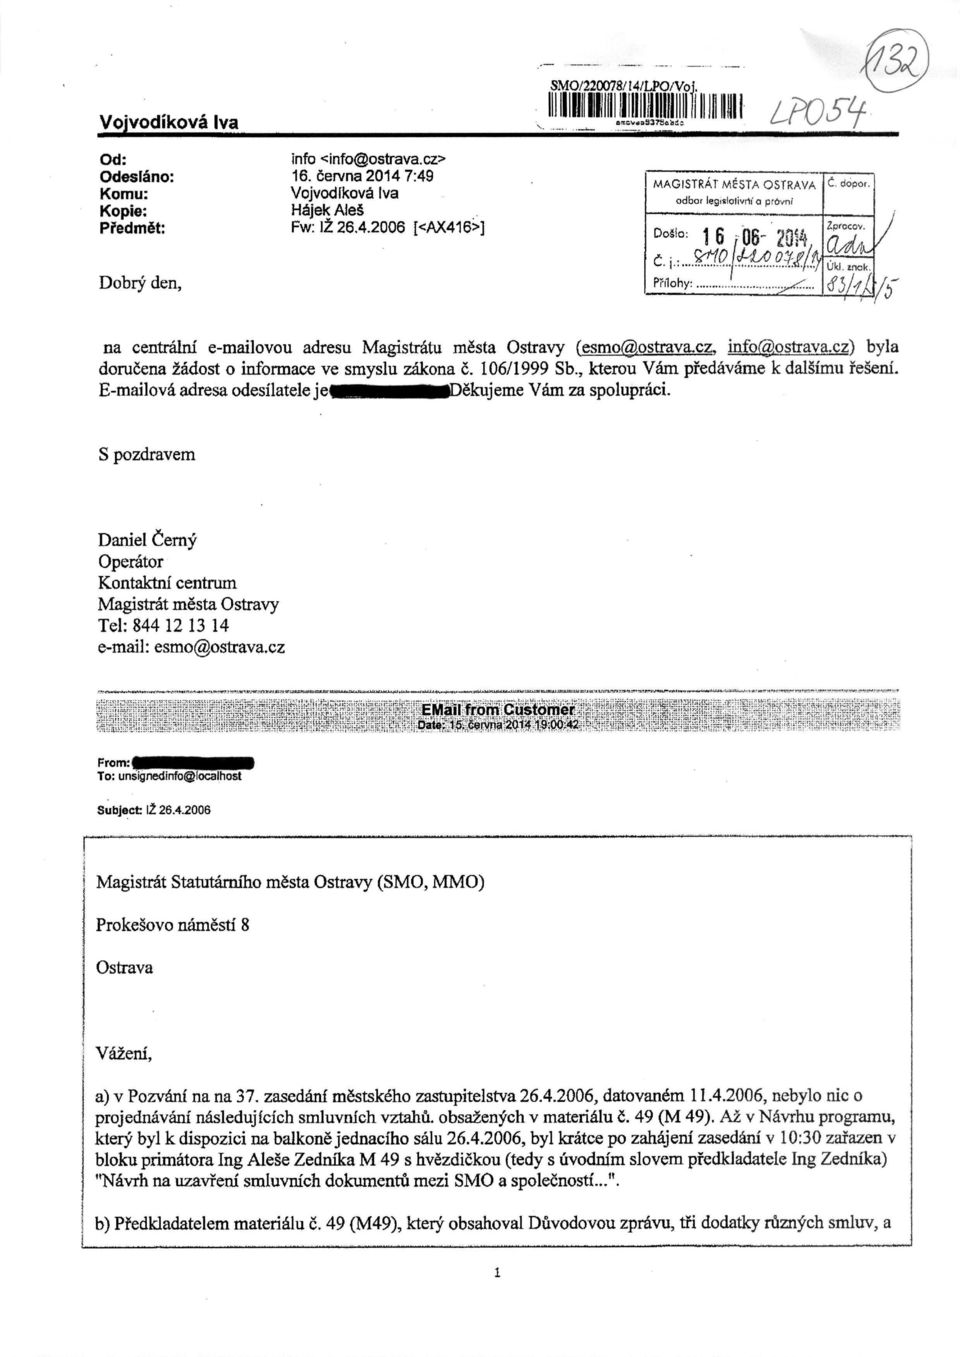 .. 1 I) na centralni e-mailovou adresu Magistratu mcsta Ostravy (esmo@ostrava.cz, info@ostrava.cz) byla dorucena 2adost o informace ve smyslu zakona c. 106/1999 Sb.